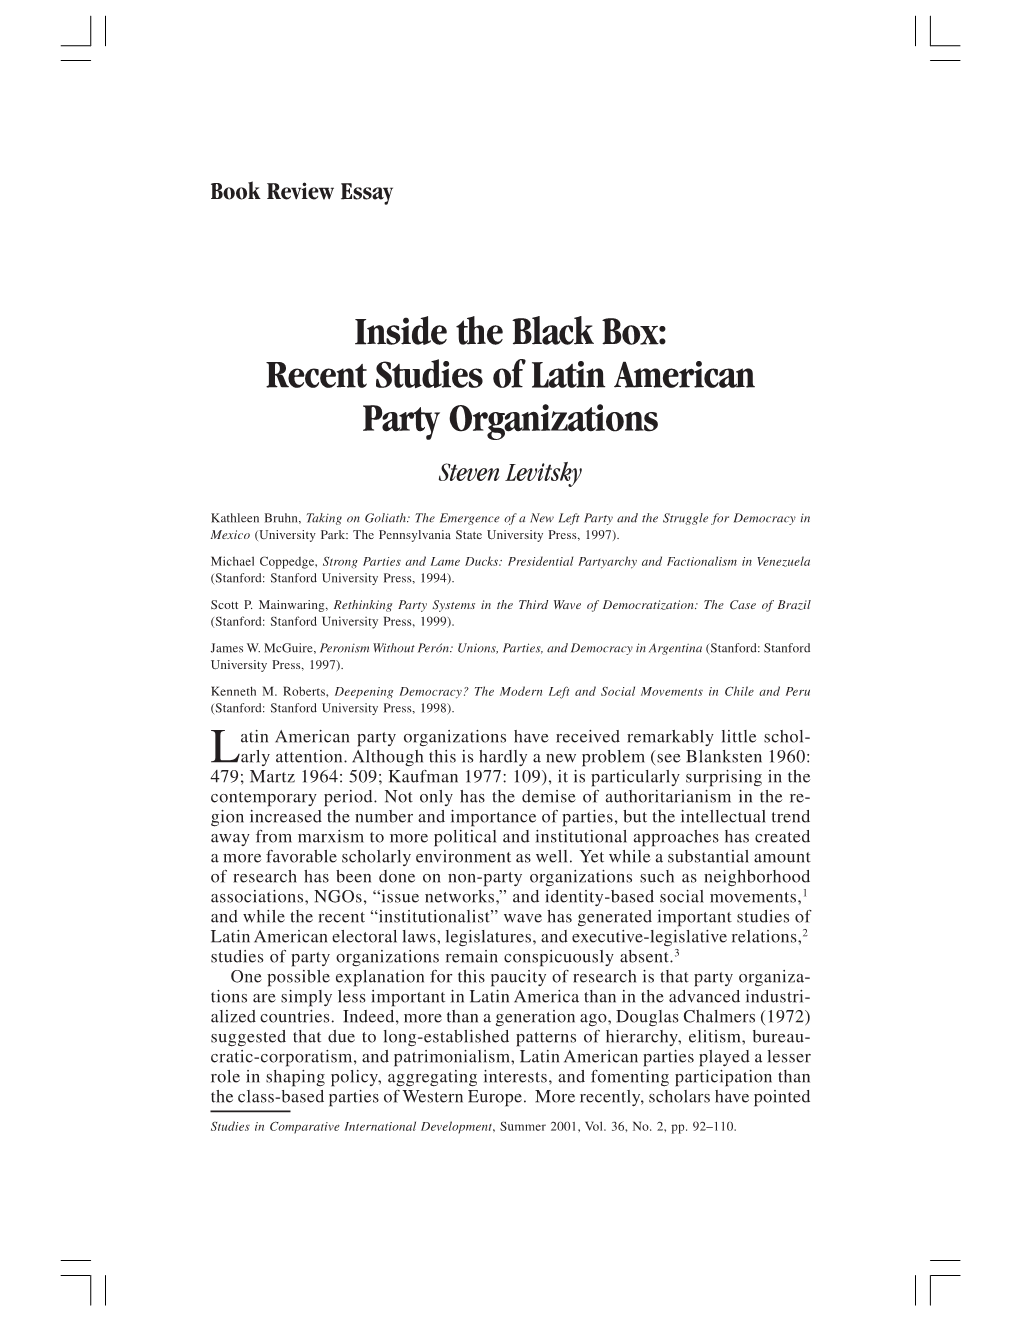 Inside the Black Box: Recent Studies of Latin American Party Organizations Steven Levitsky